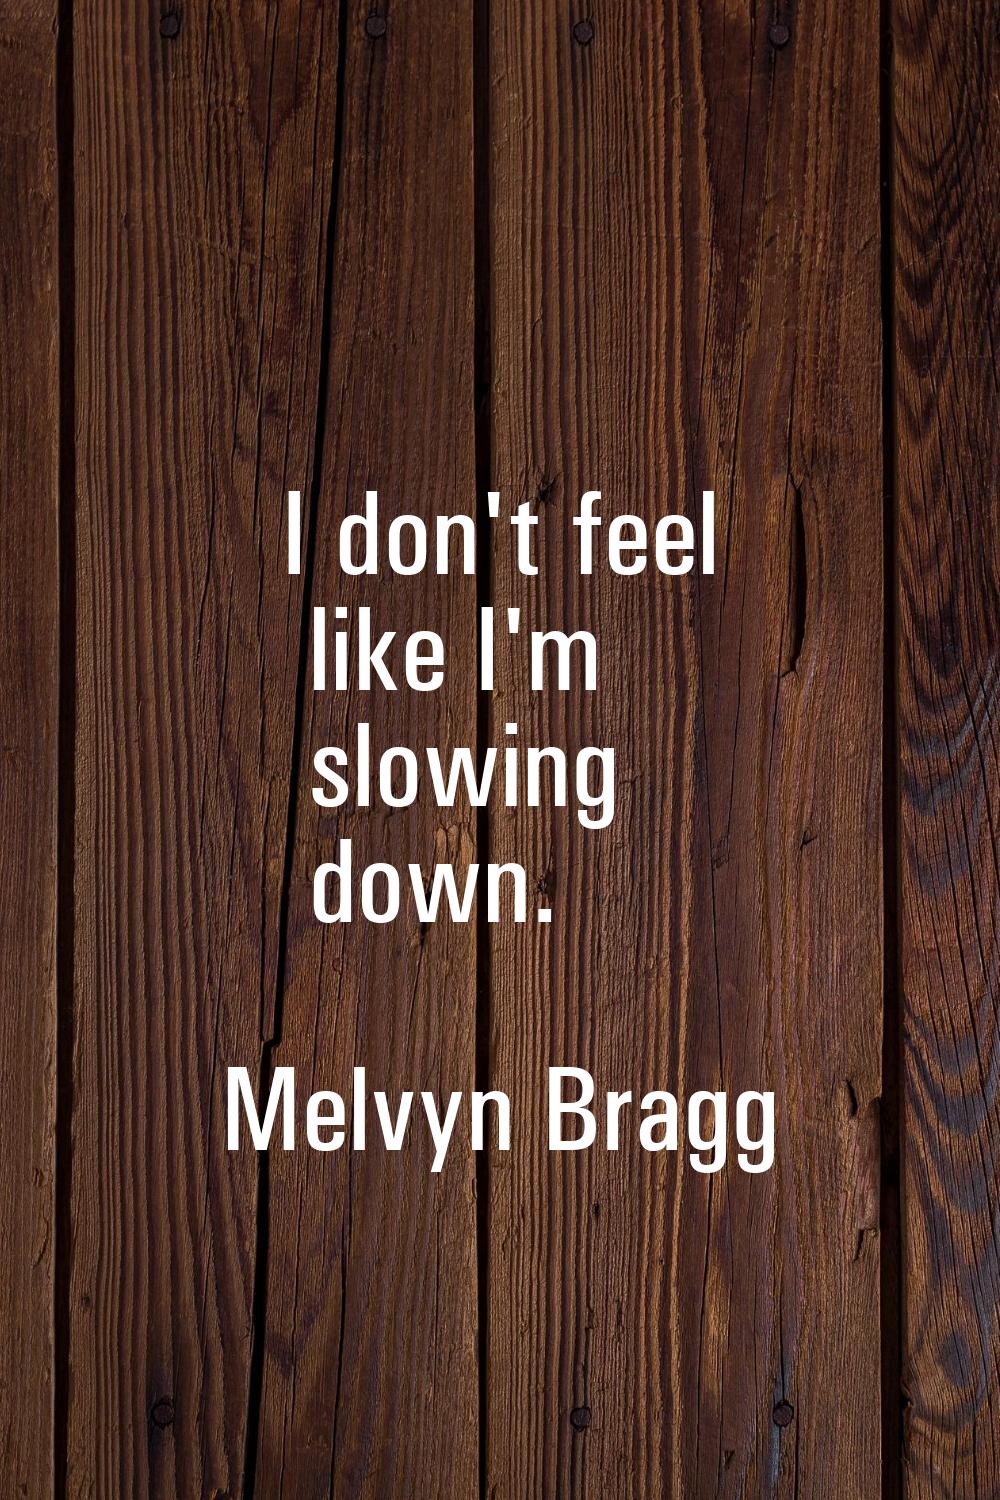 I don't feel like I'm slowing down.